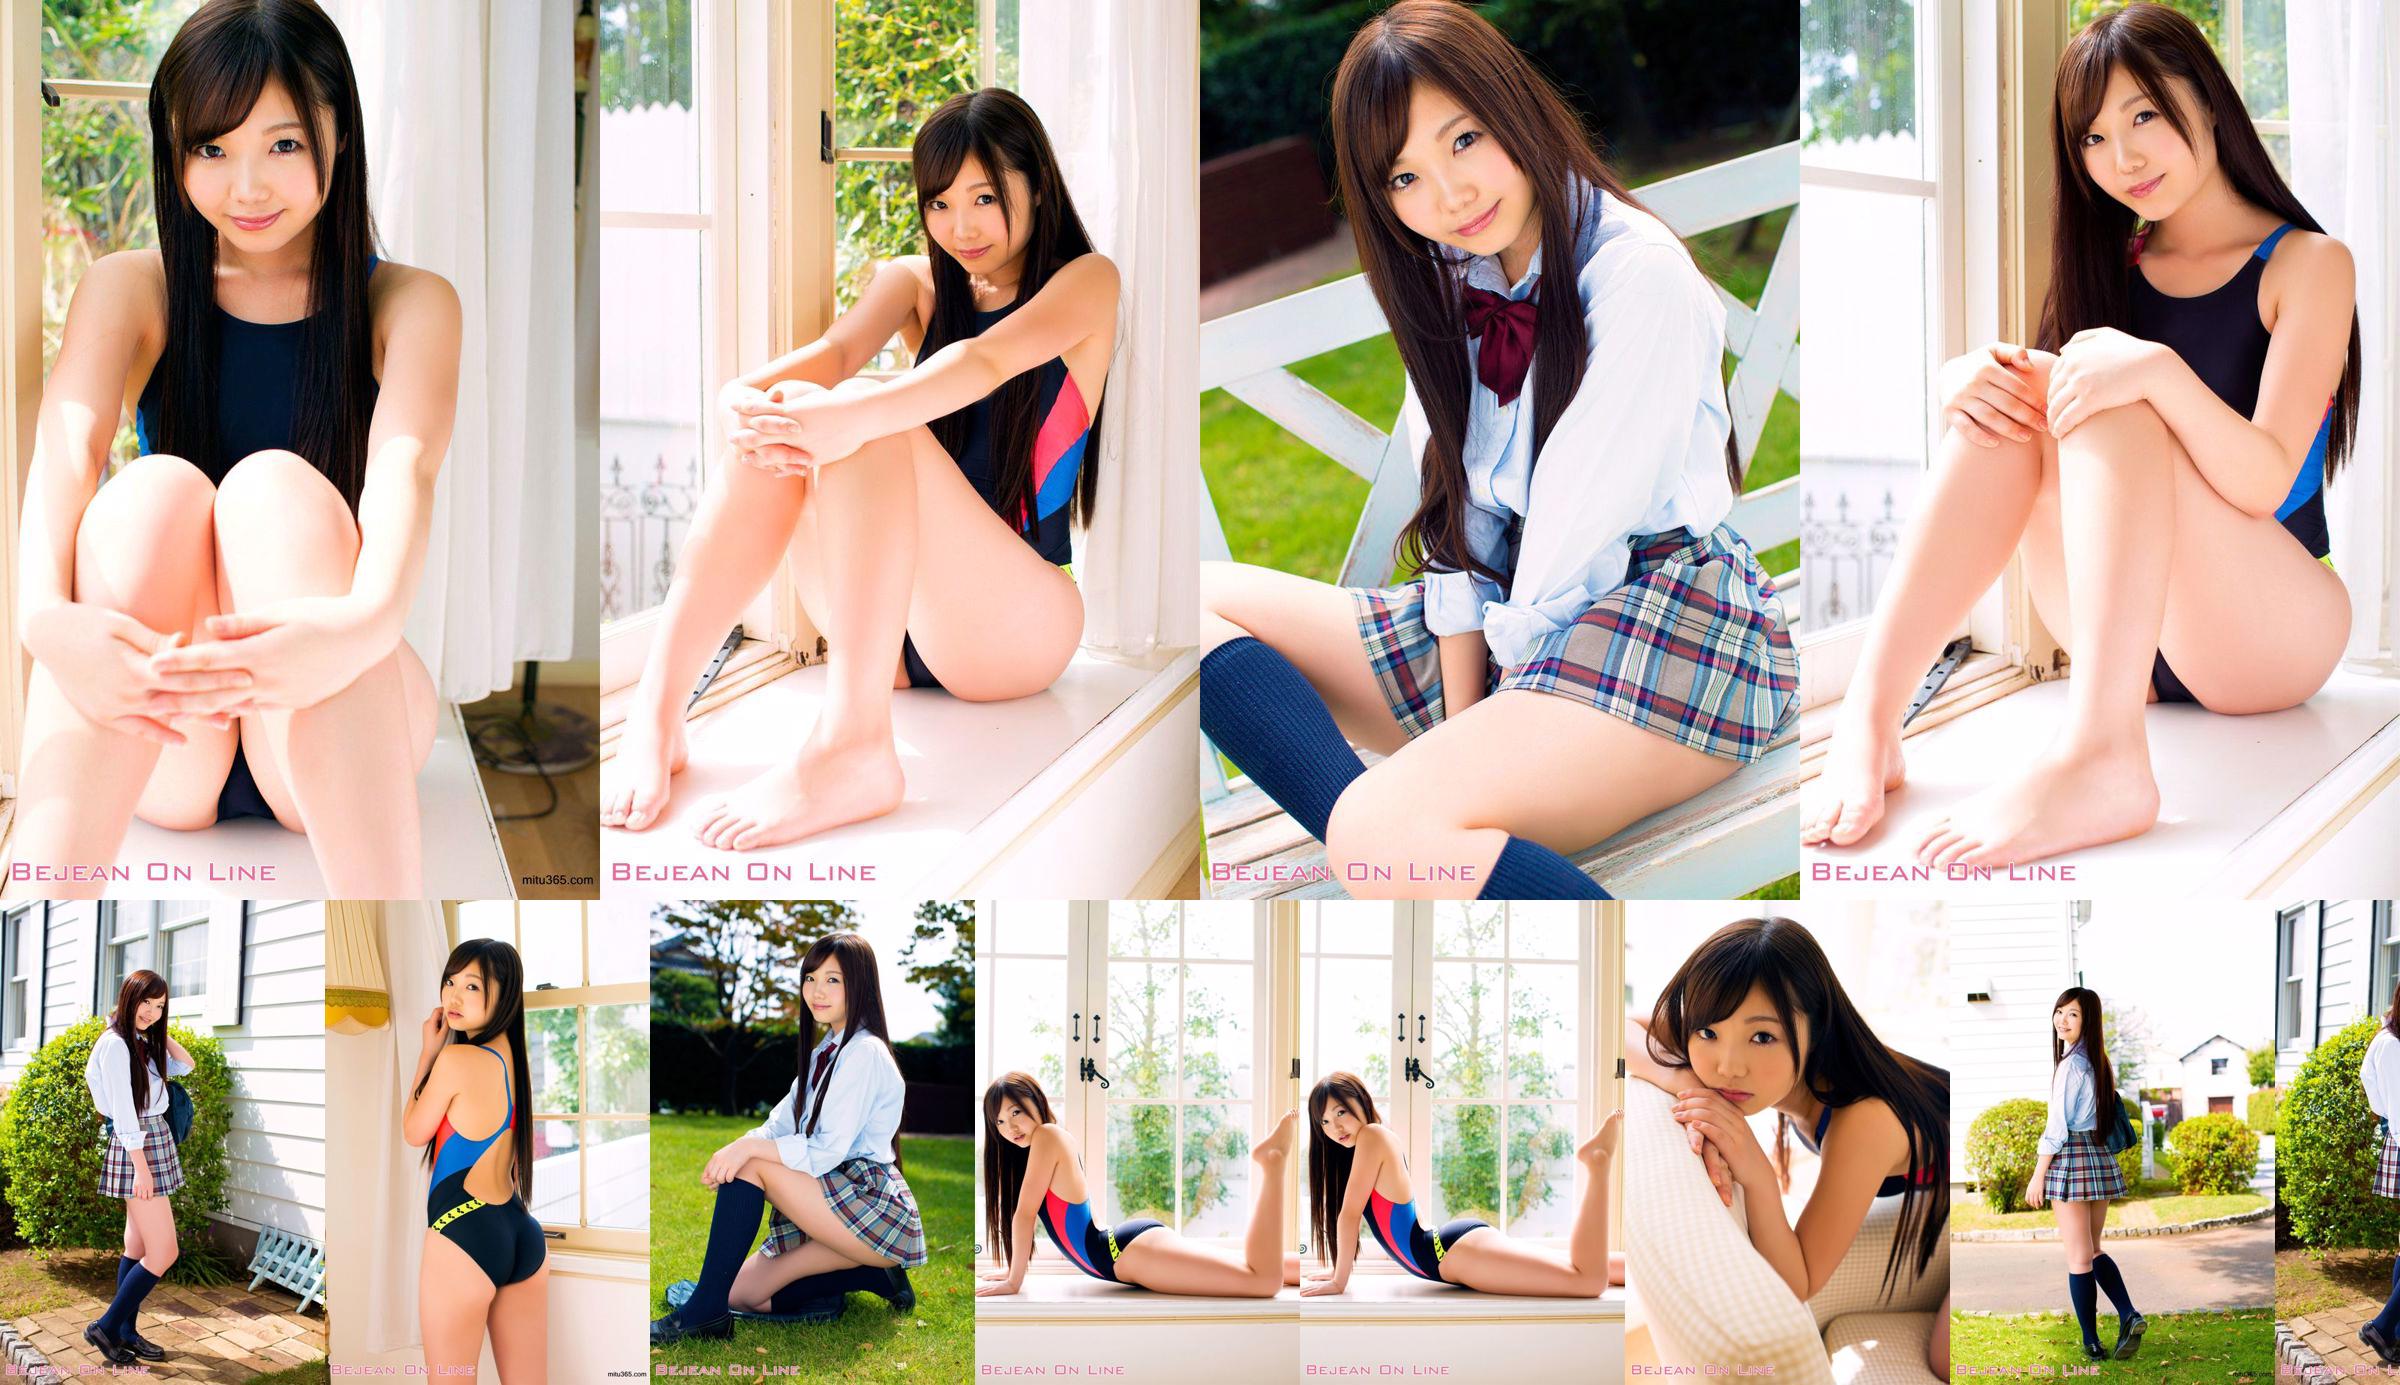 Rie Matsuoka Matsuoka Riei [Bejean Online] Private Bejean Girls 'School No.f77b38 Seite 1